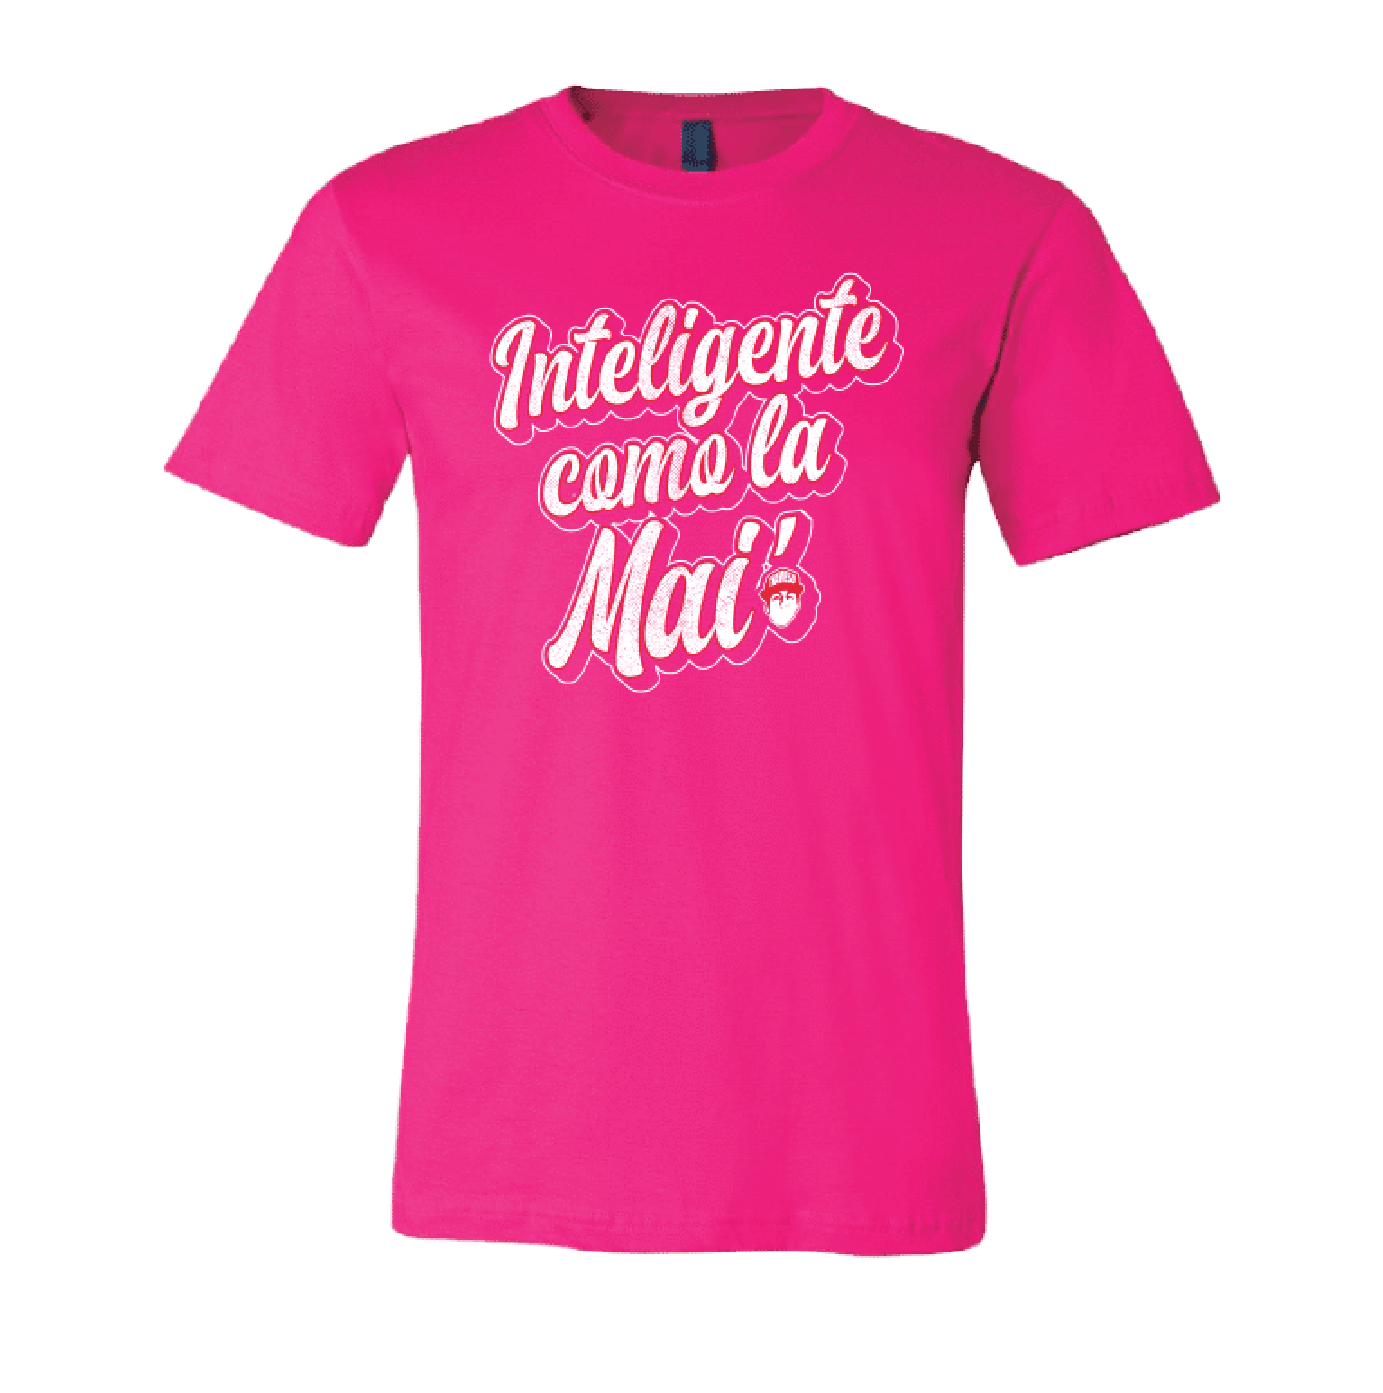 "Inteligente Como La Mai” T-Shirt